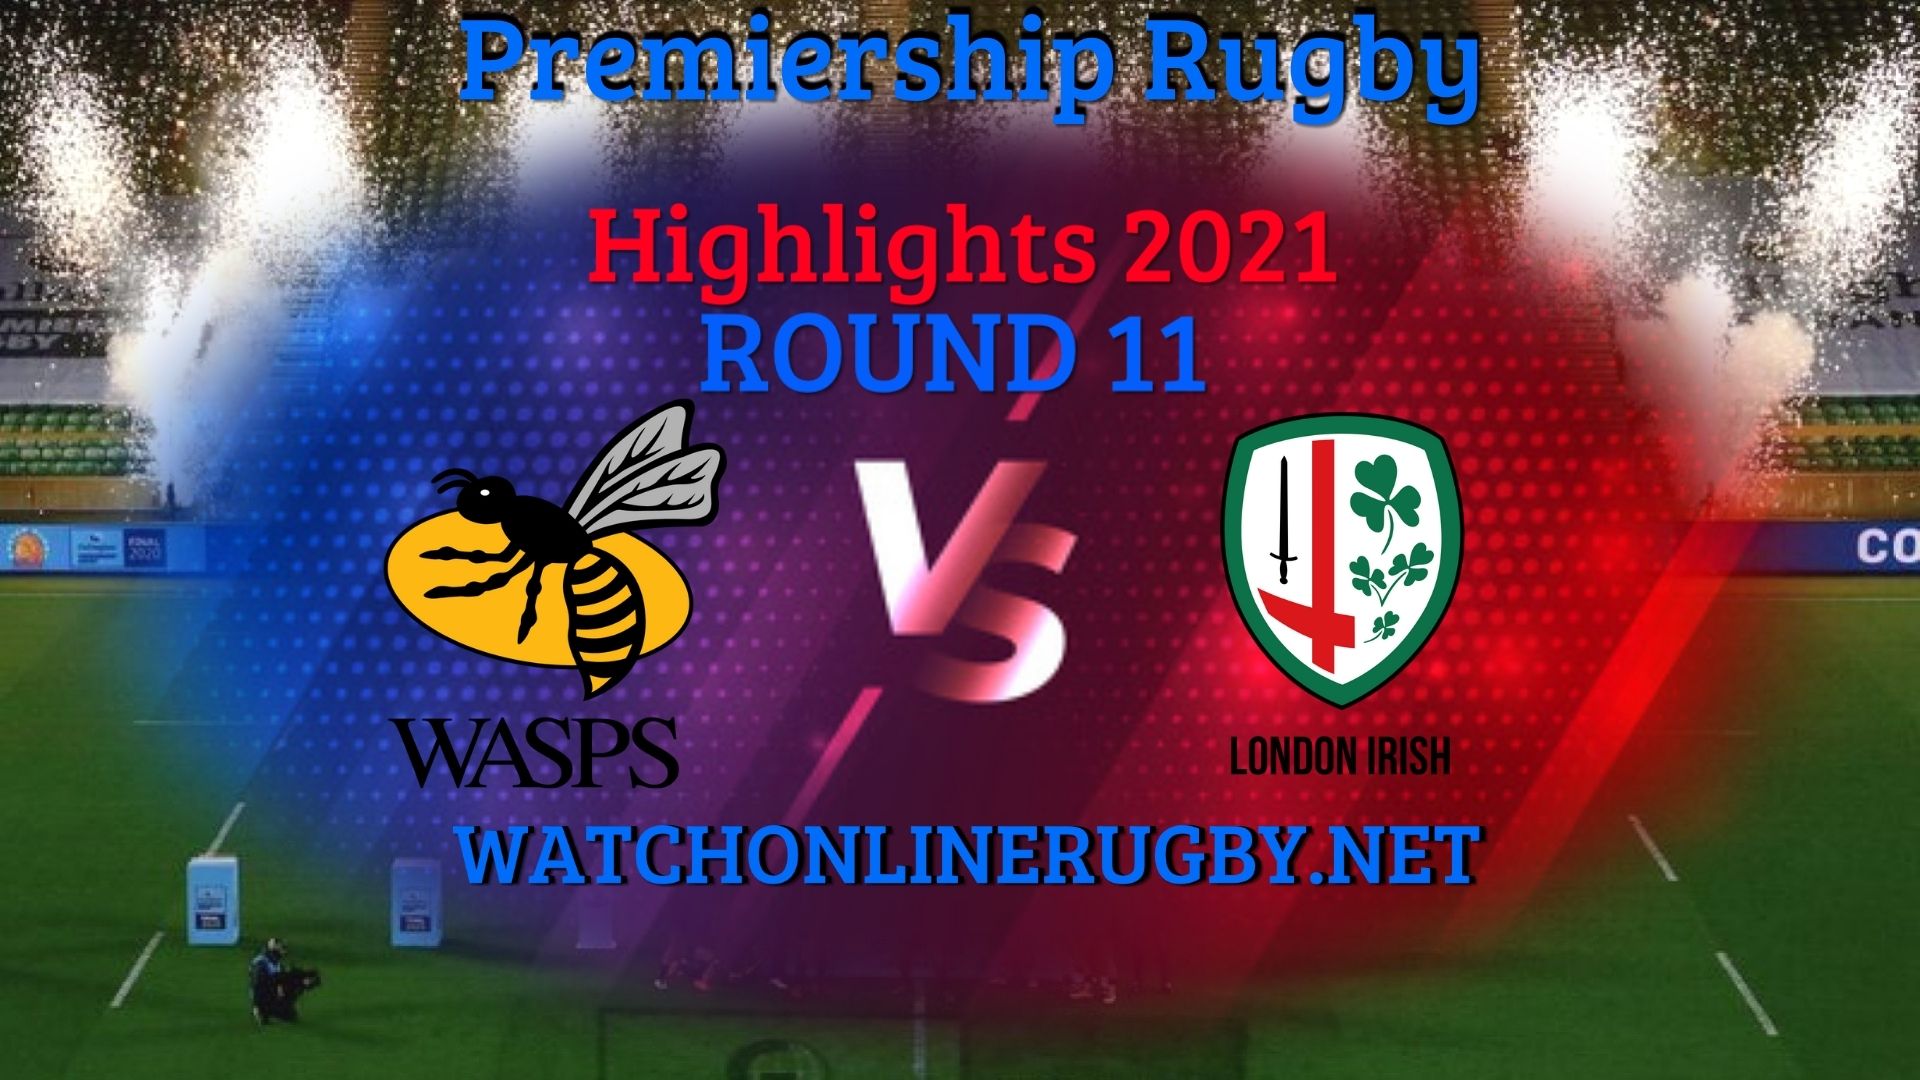 Wasps Vs London Irish Premiership Rugby 2021 RD 11